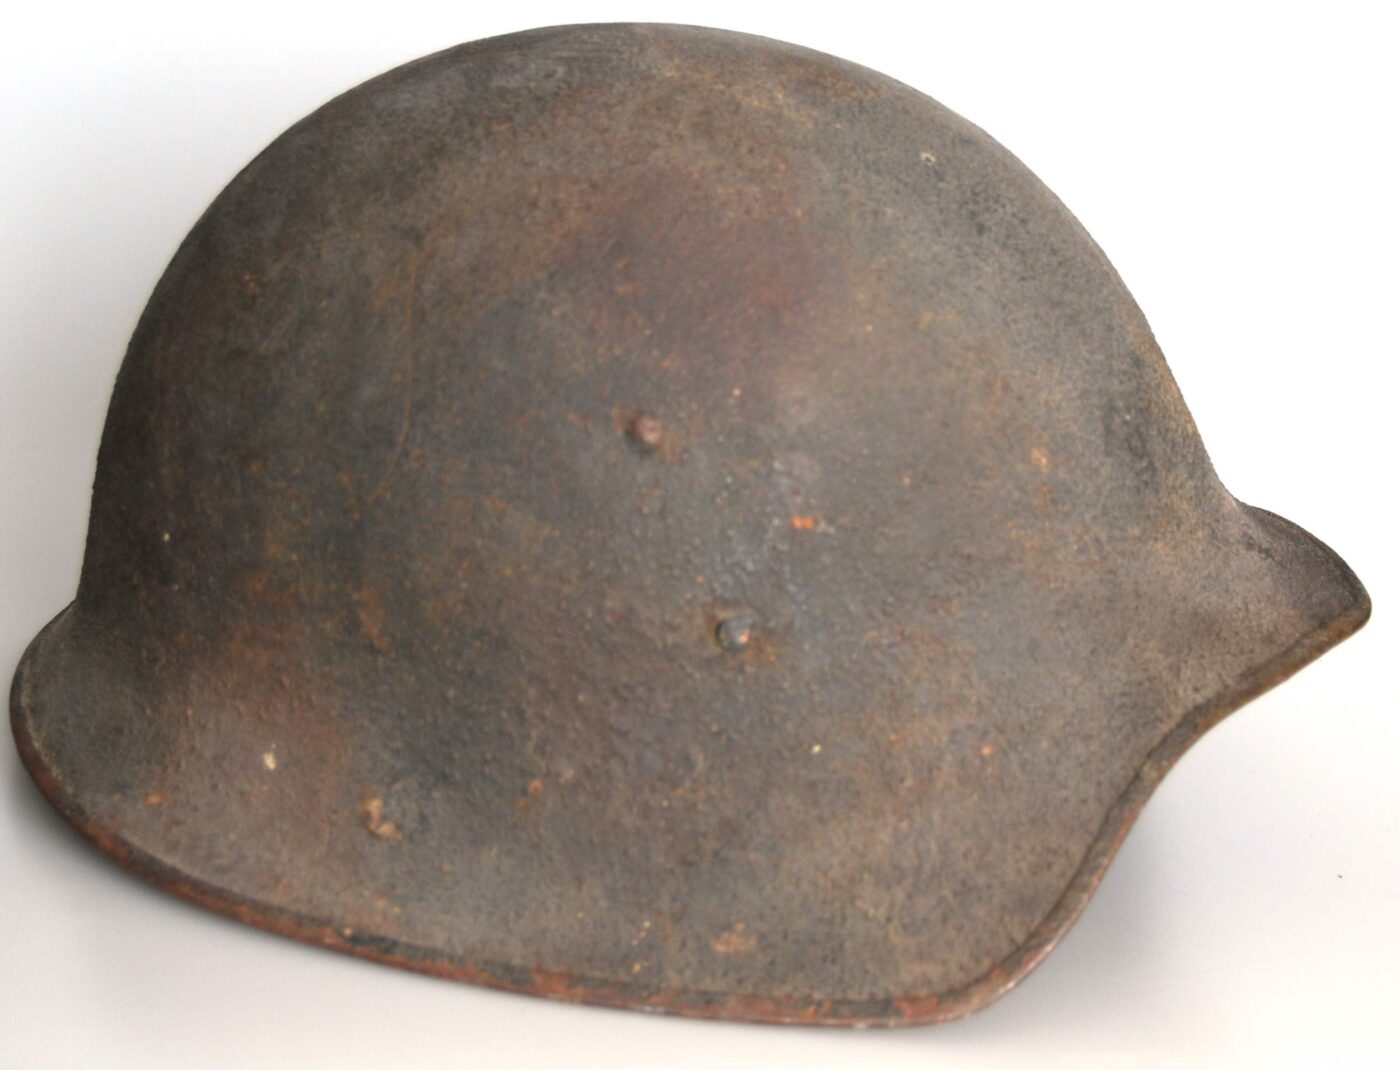 US Model 5 helmet